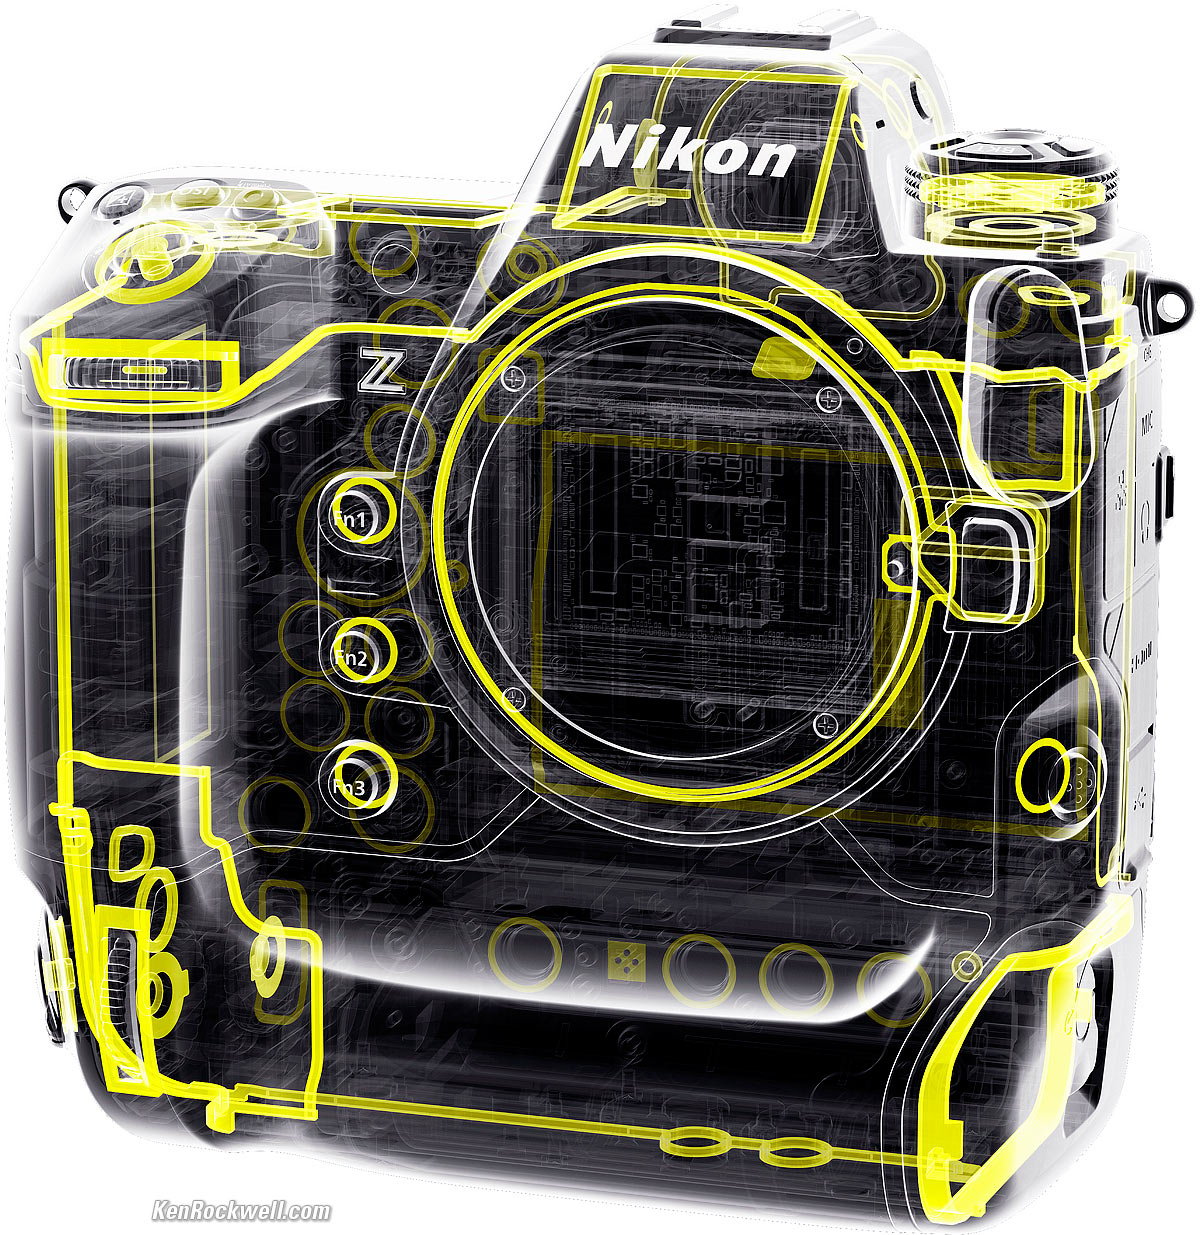 Nikon Z9 Review & Sample Image Files by Ken Rockwell